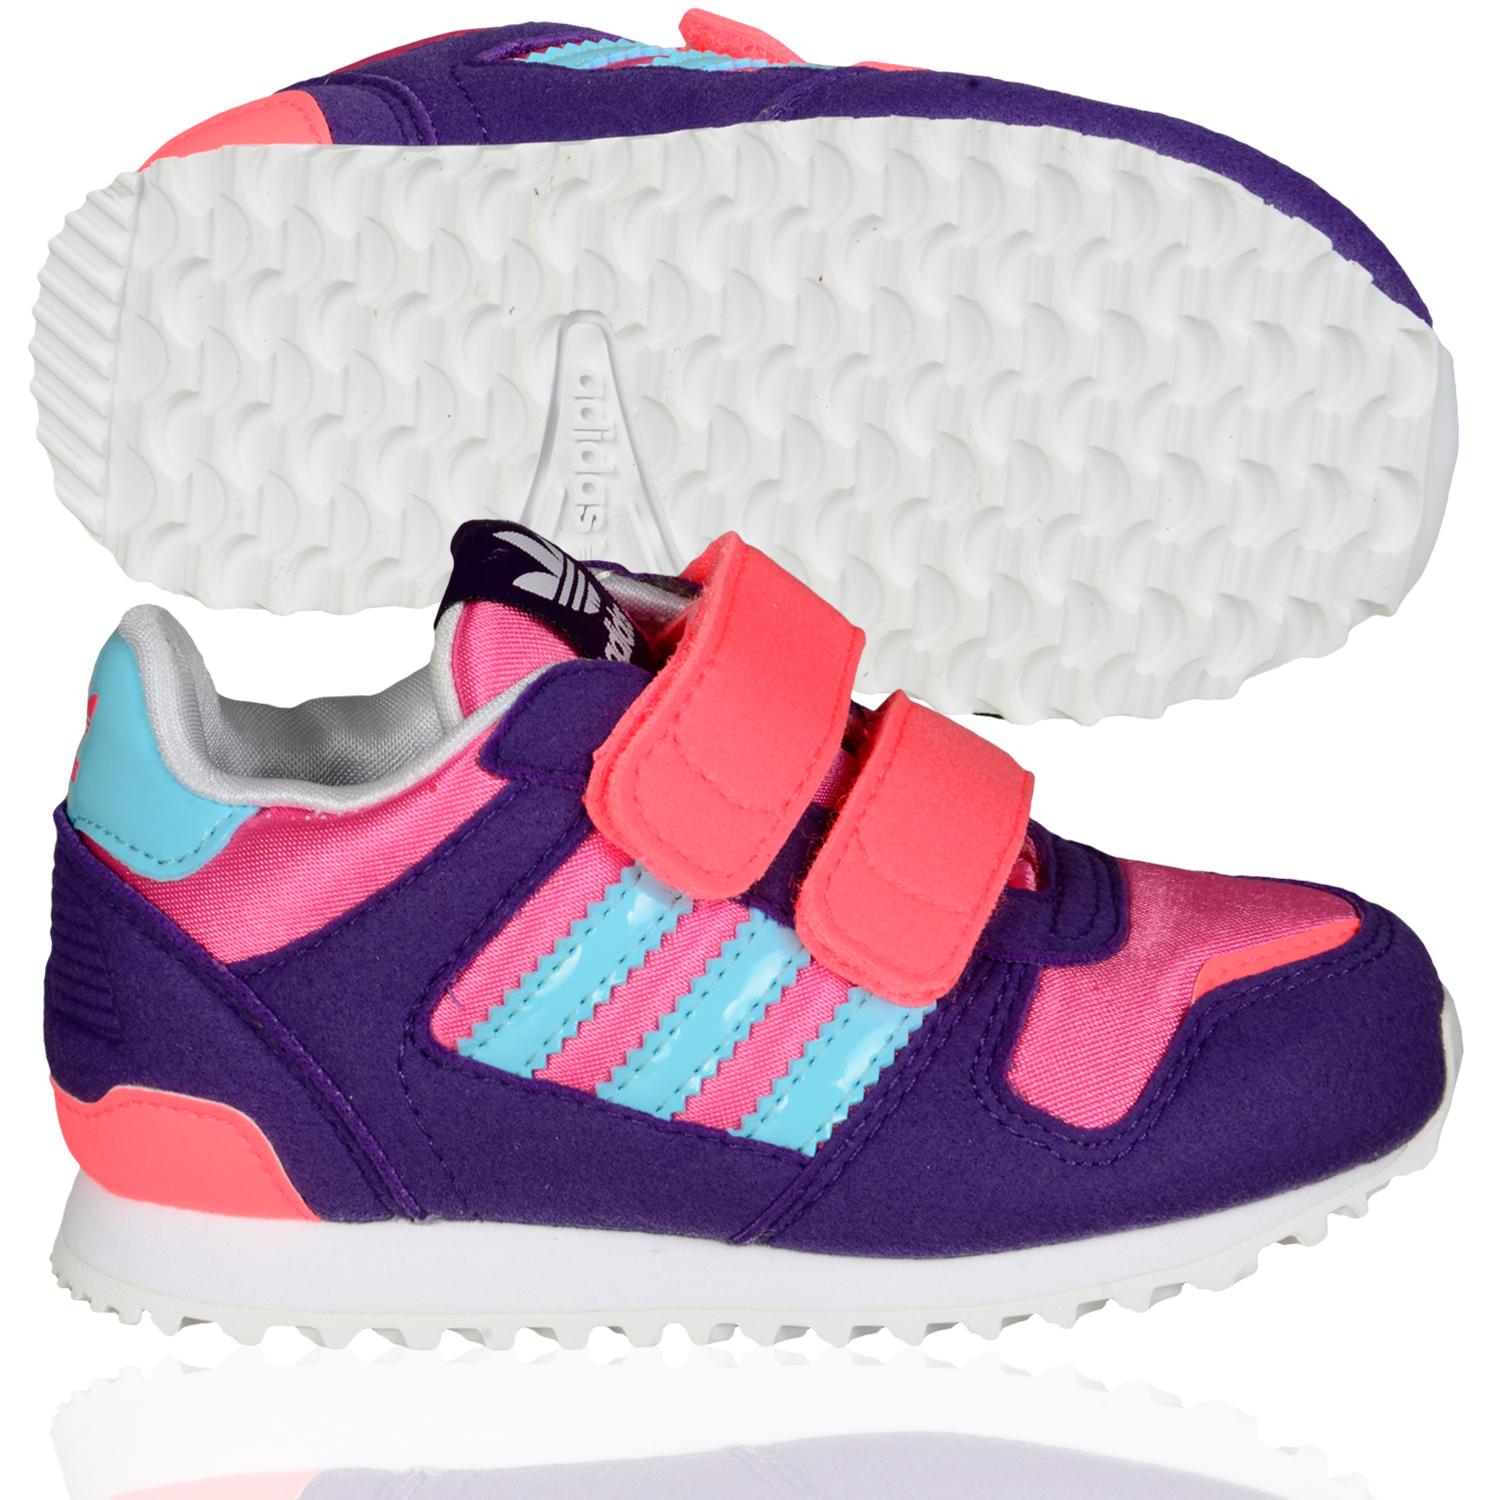 Foto Adidas Shoe Kids Zx 700 Cf 1 La Zapatilla De Deporte Bajo Púrpura M...